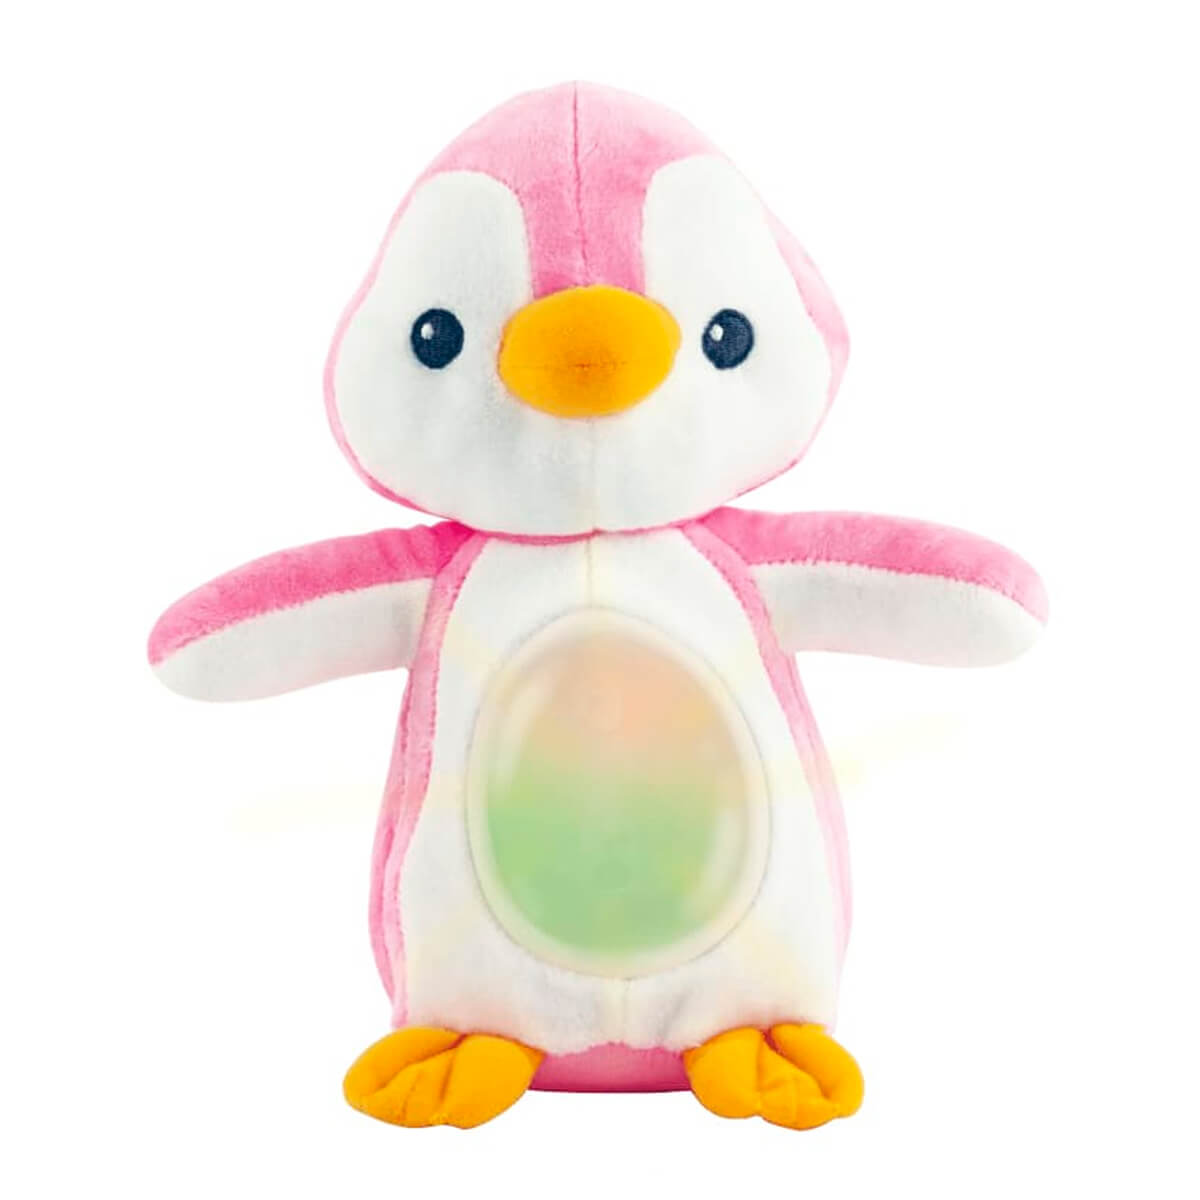 Winfun - Pinguino musical que se ilumina Rosado - Productos para bebes | Mamita y Yo